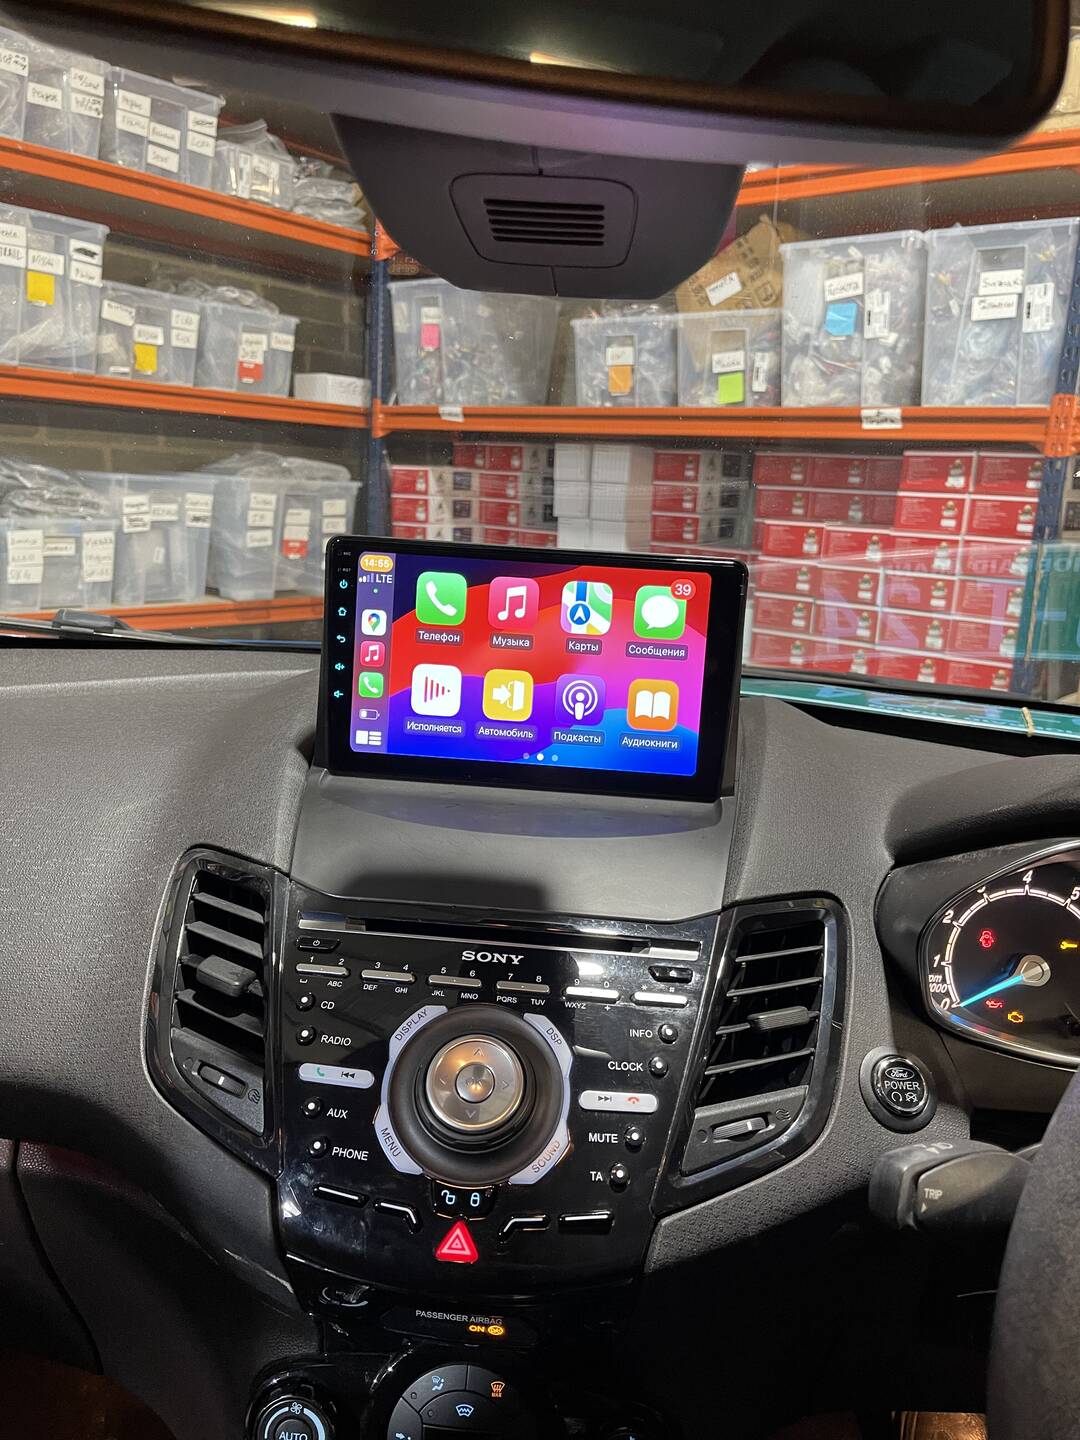 IMG 2751 scaled - Radio King Ireland - Android Car Radios and CarPlay Systems